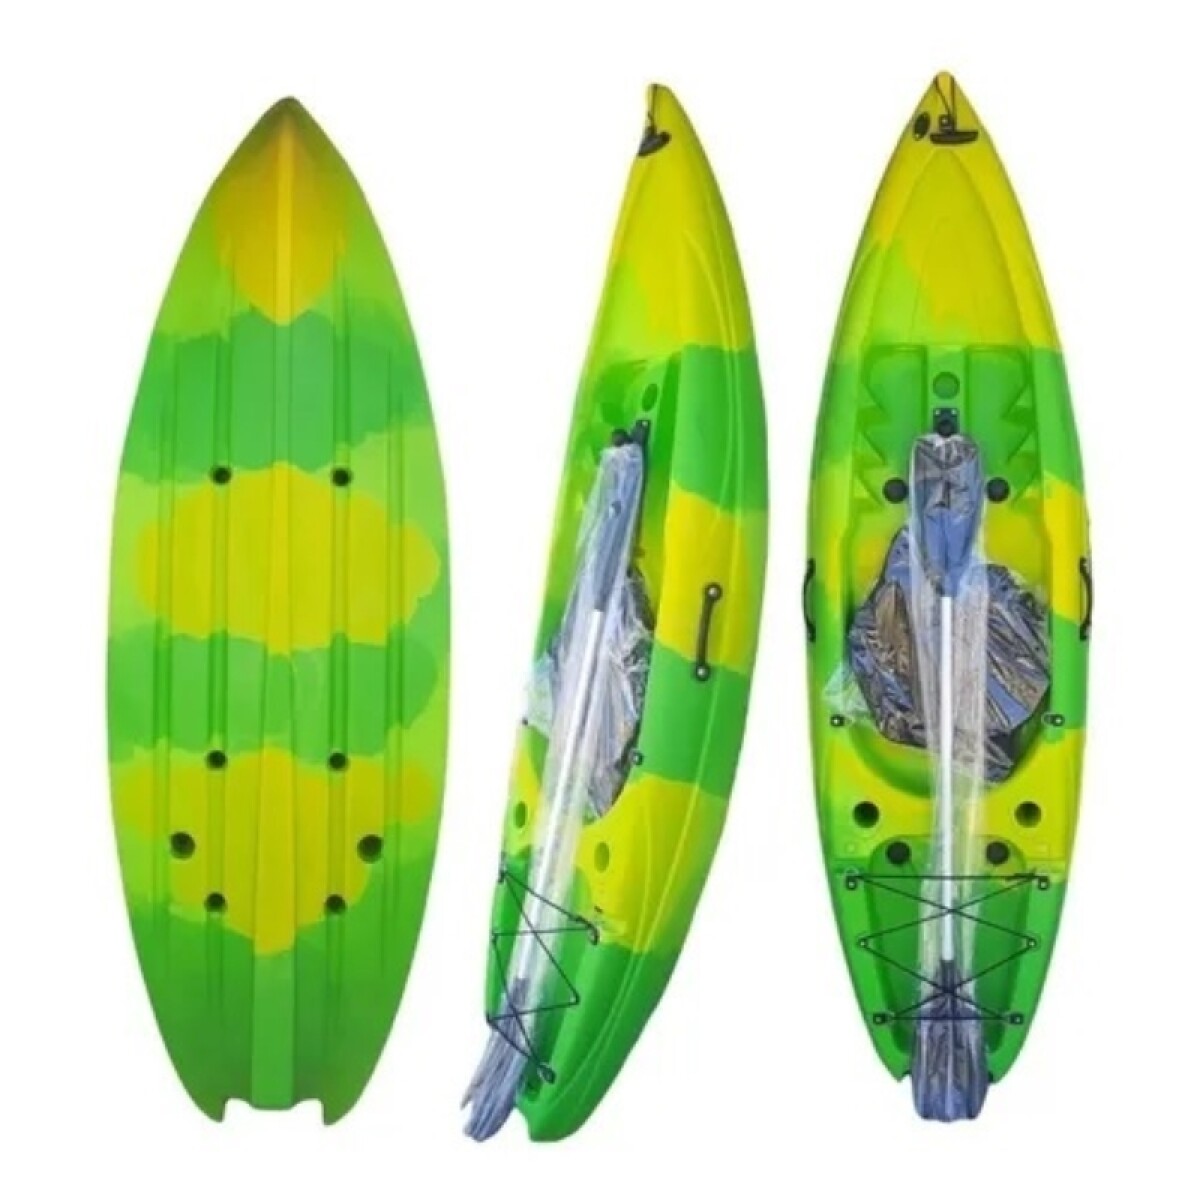 Kayak Woowave Mickey 2.20mts + Remo + Asiento + Correa - Amarillo/verde 